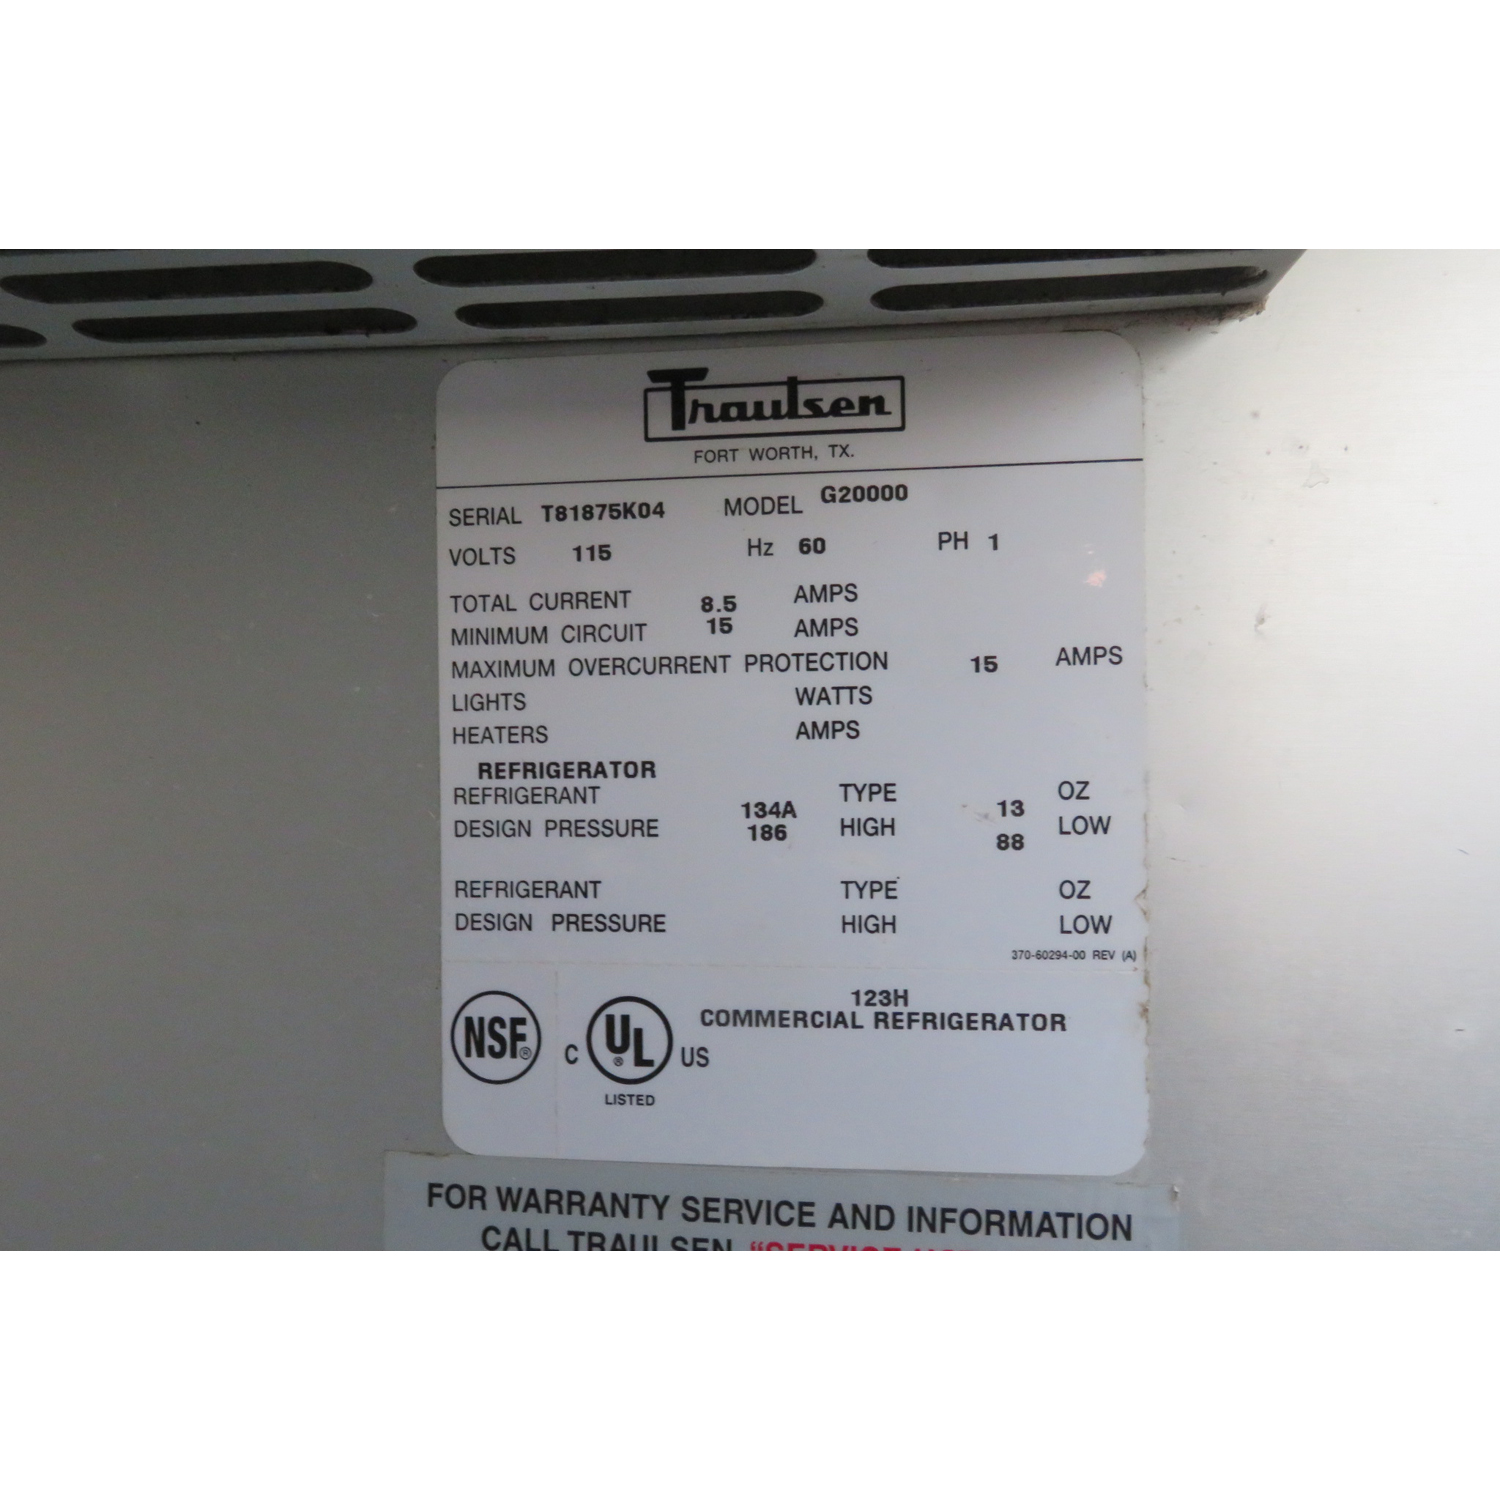 Traulsen G20000 Refrigerator 2 Section Half Door, Used Great Condition image 3